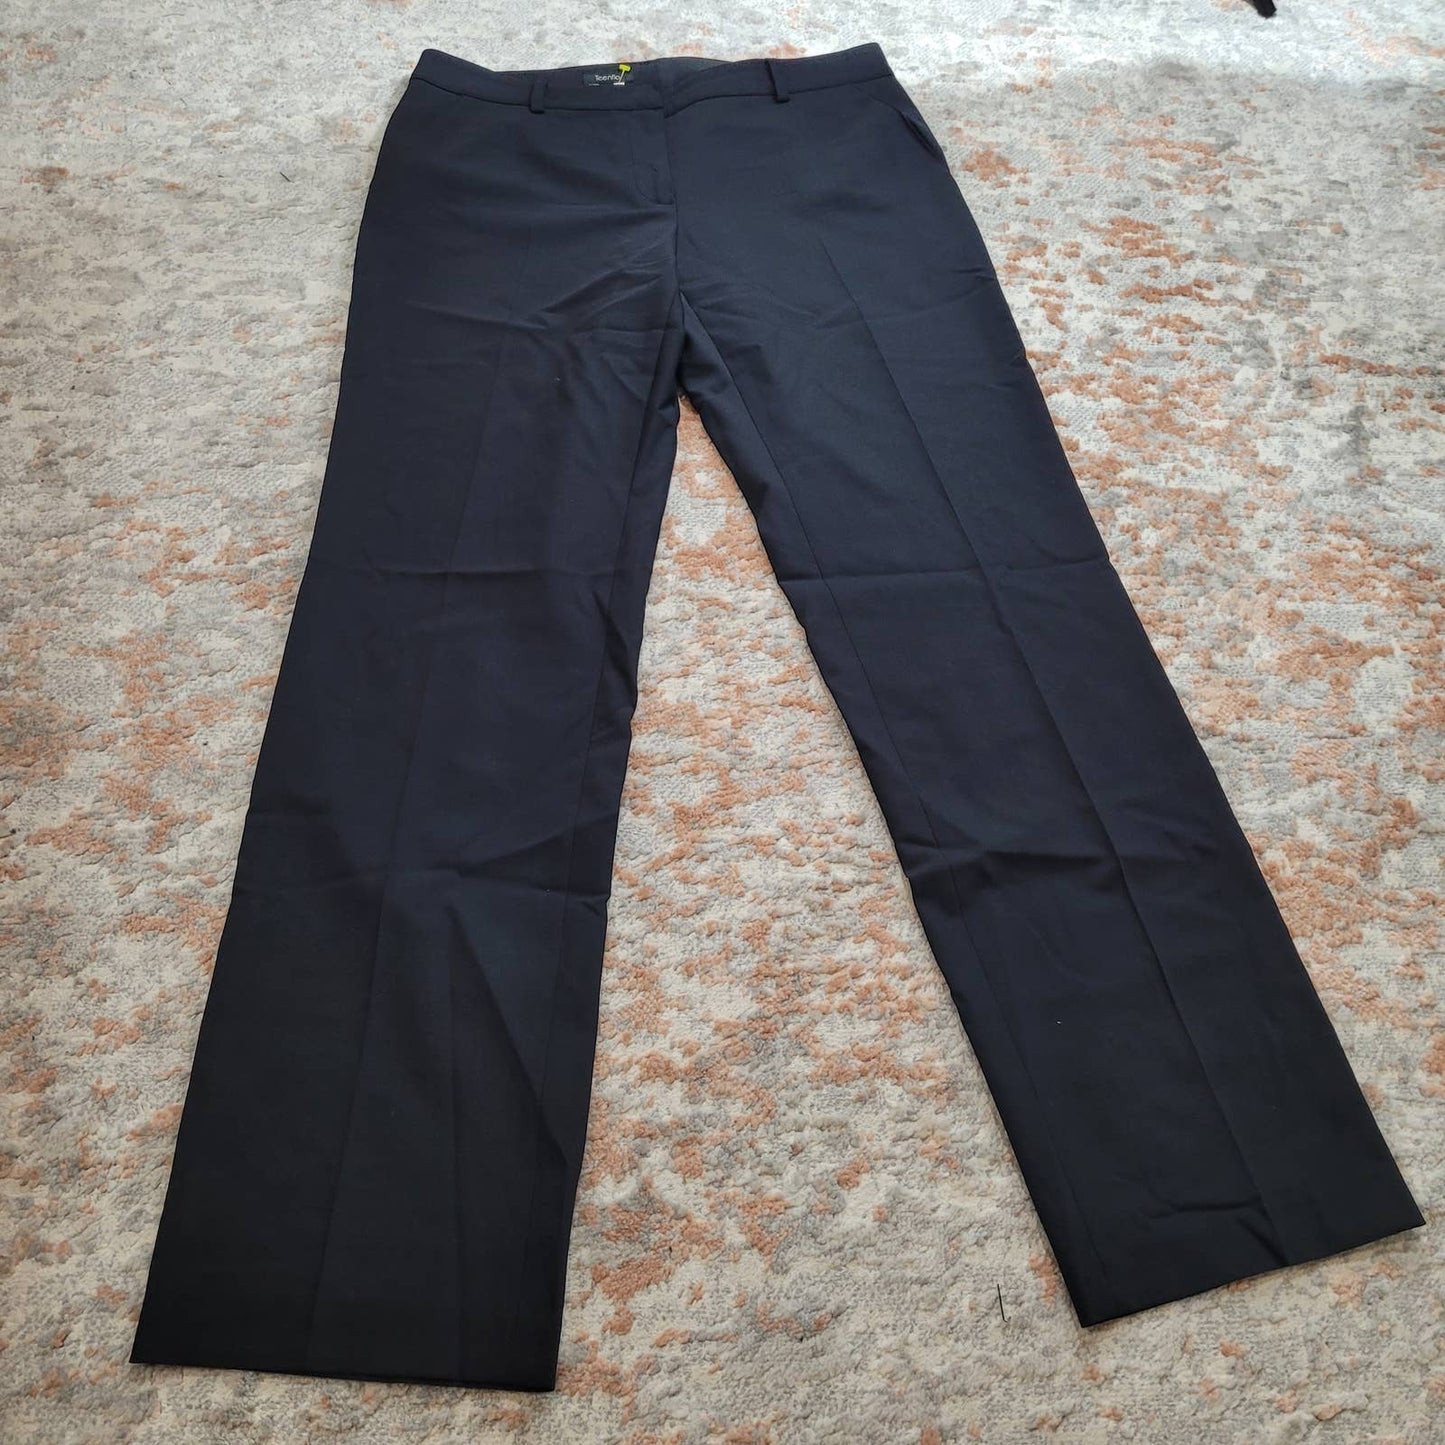 Teenflo Wool Blend Black Dress Pants - Size 10